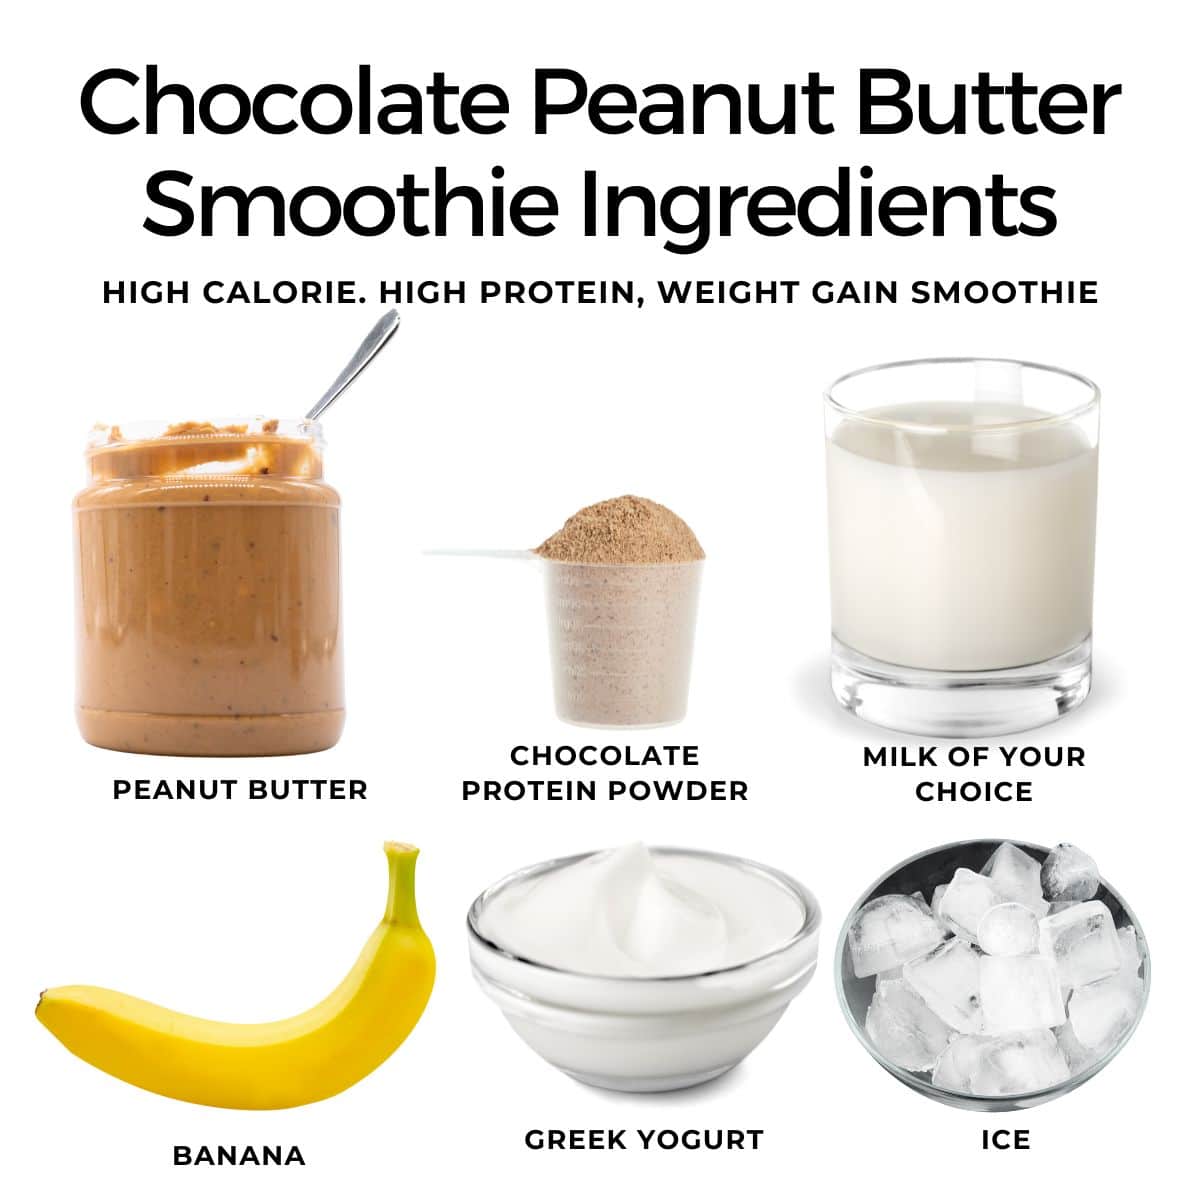 High calorie High Protein Smoothie ingredients: peanut butter, whey protein, milk, banana, Greek yogurt, and ice